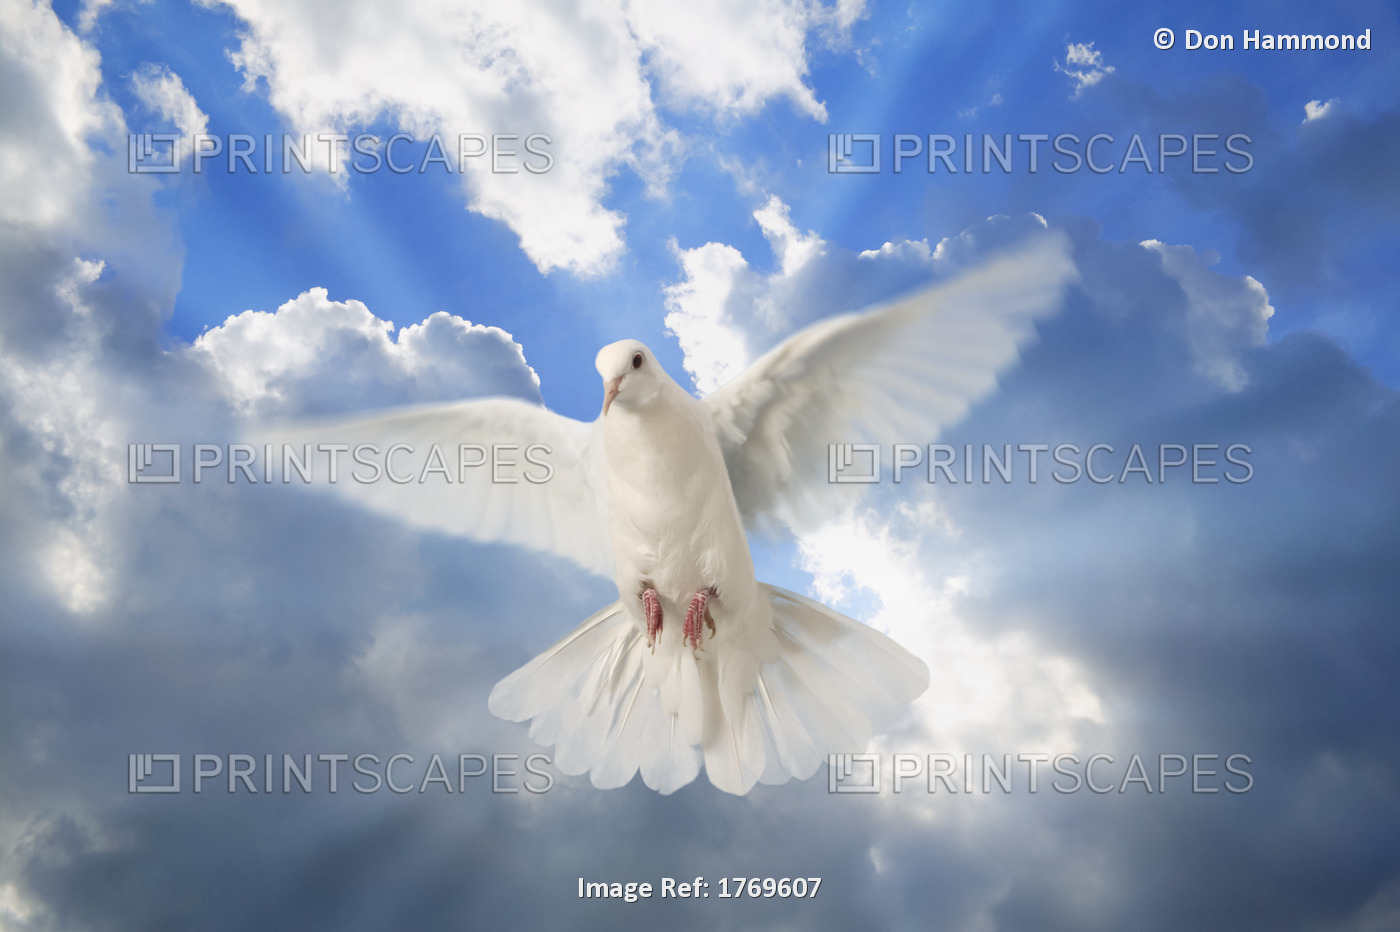 A Dove In The Sky